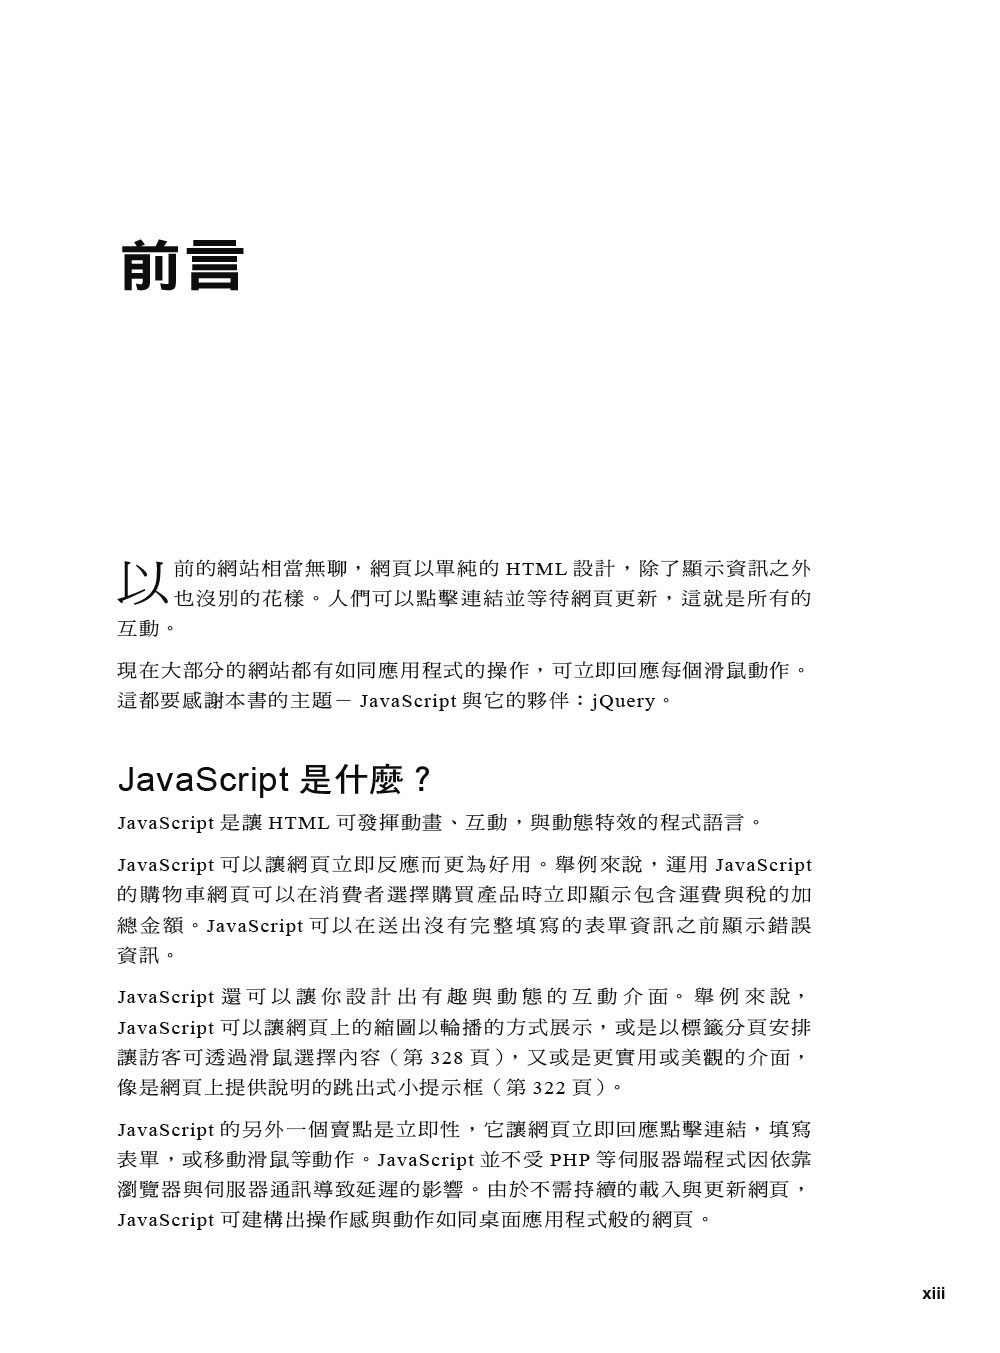 ►GO►最新優惠► 【書籍】JavaScript & jQuery：The Missing Manual國際中文版(第三版)